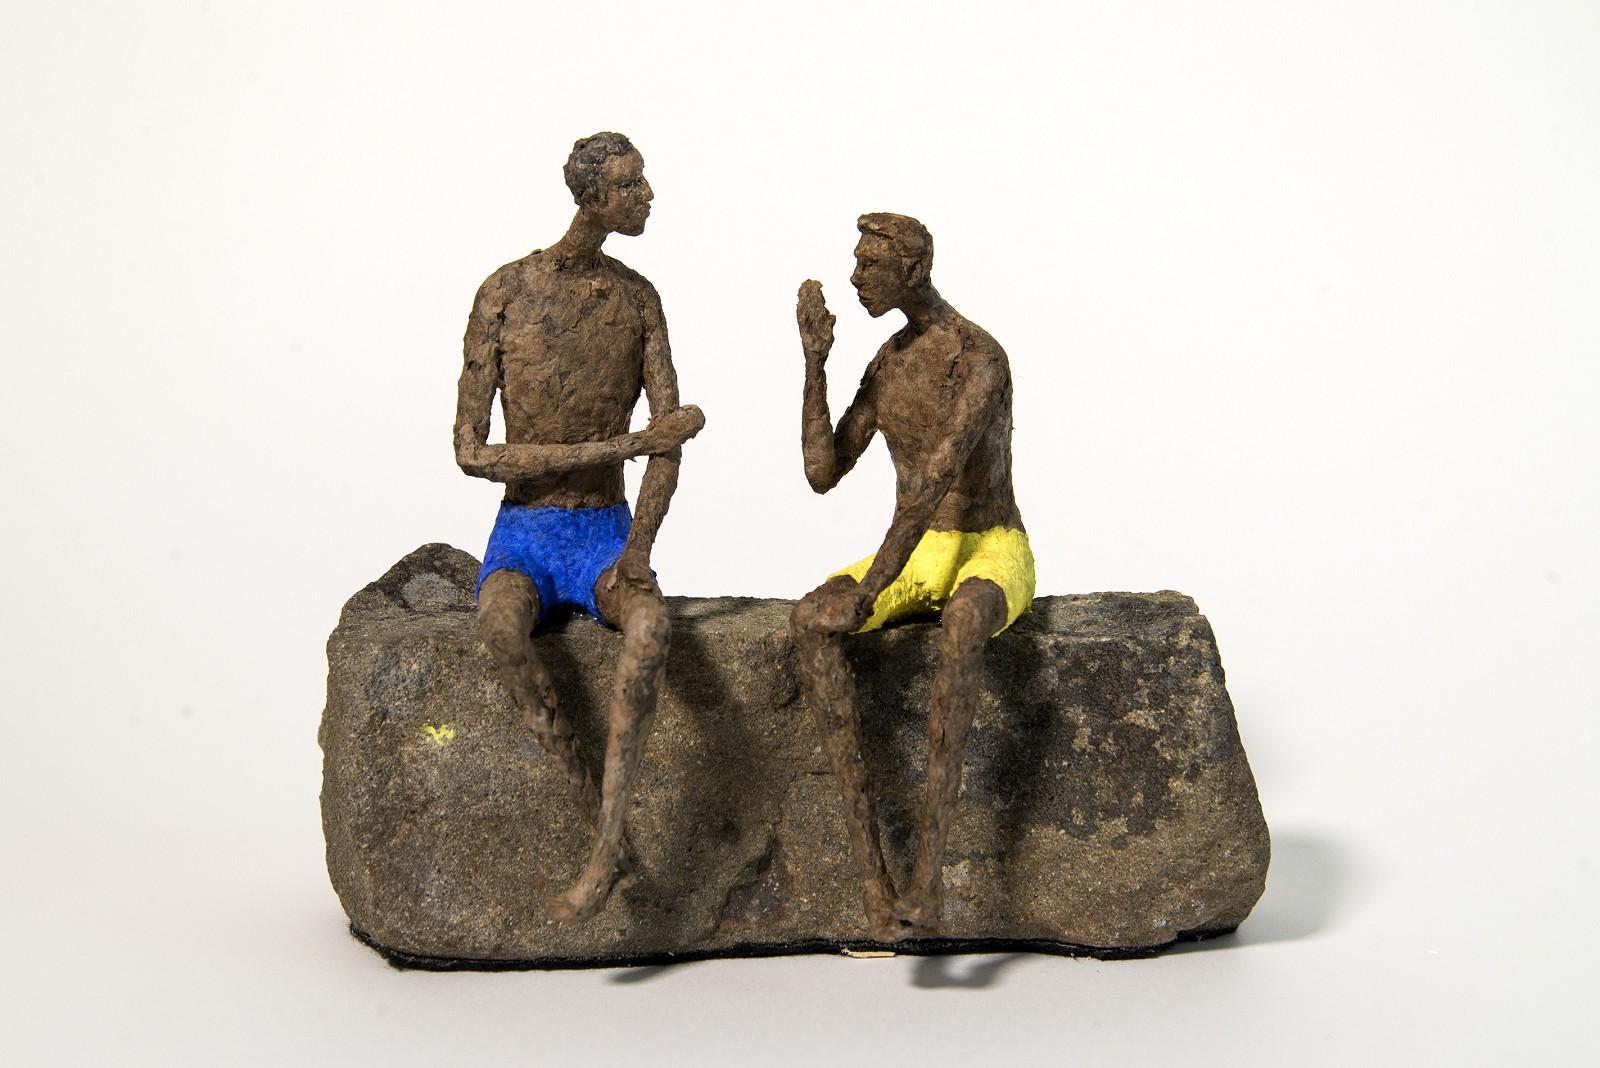 Paul Duval Figurative Sculpture - The Short Story - expressive, textured, male figurative paper Mache sculpture